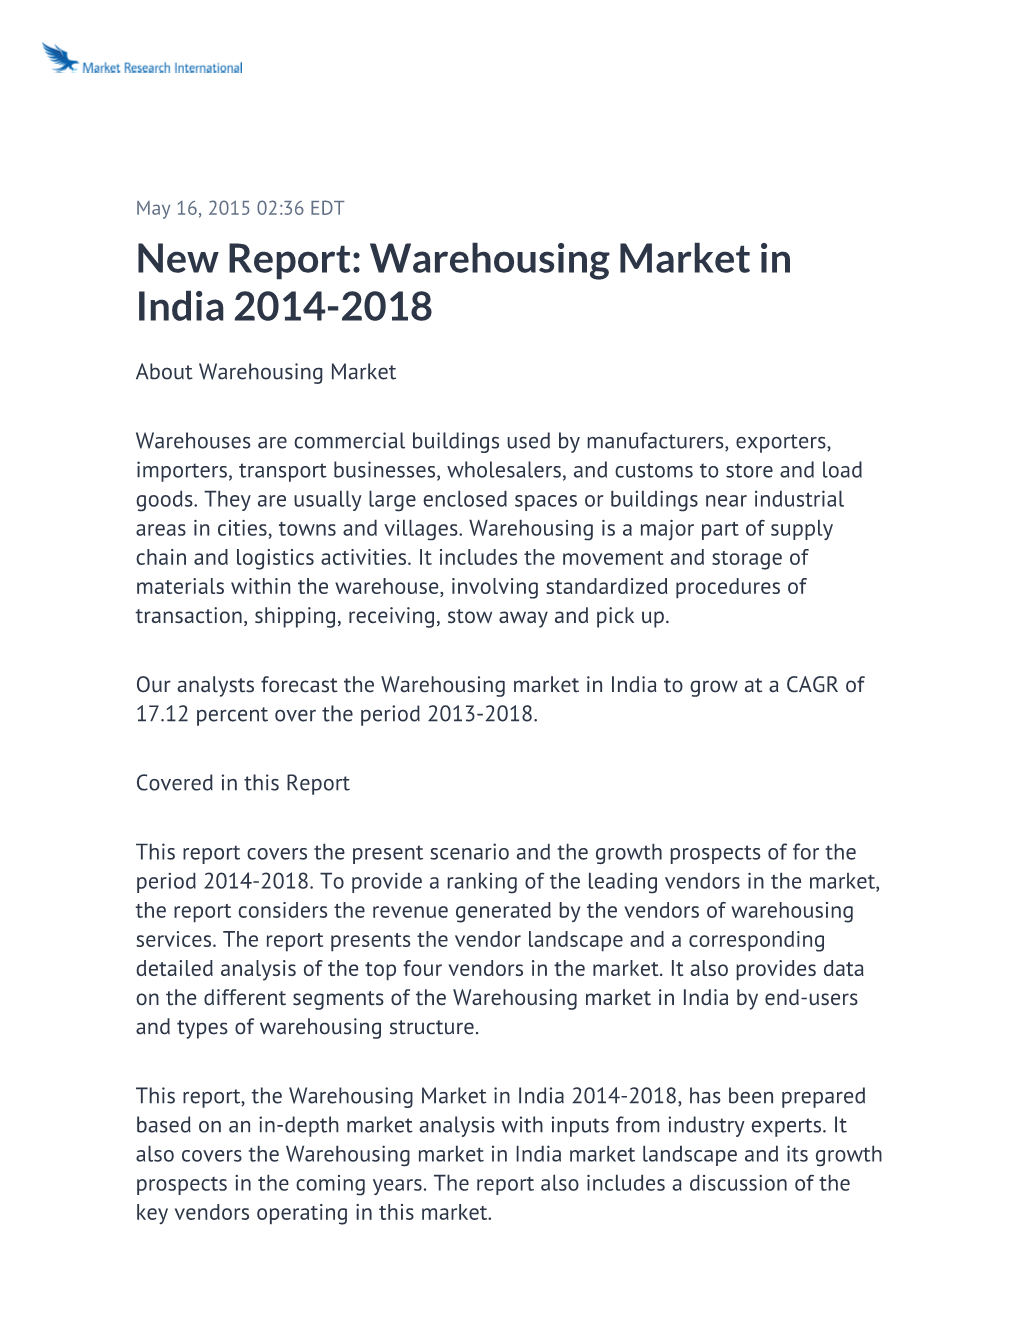 Warehousing Market in India 2014-2018